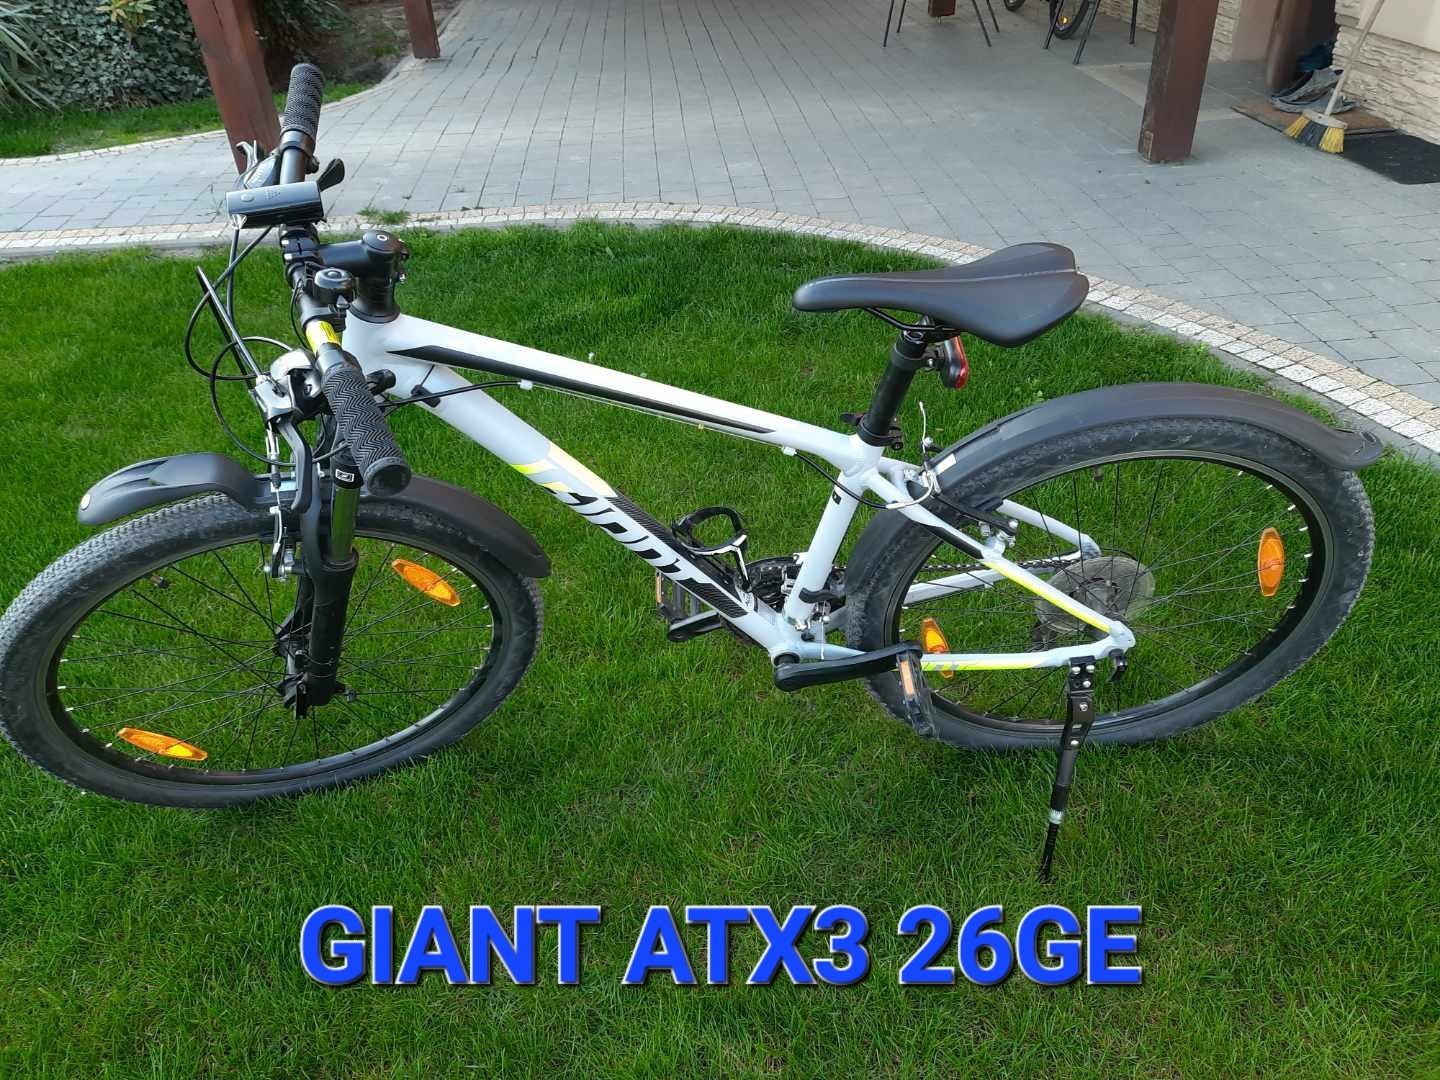 Rower Giant ATX3 26GE